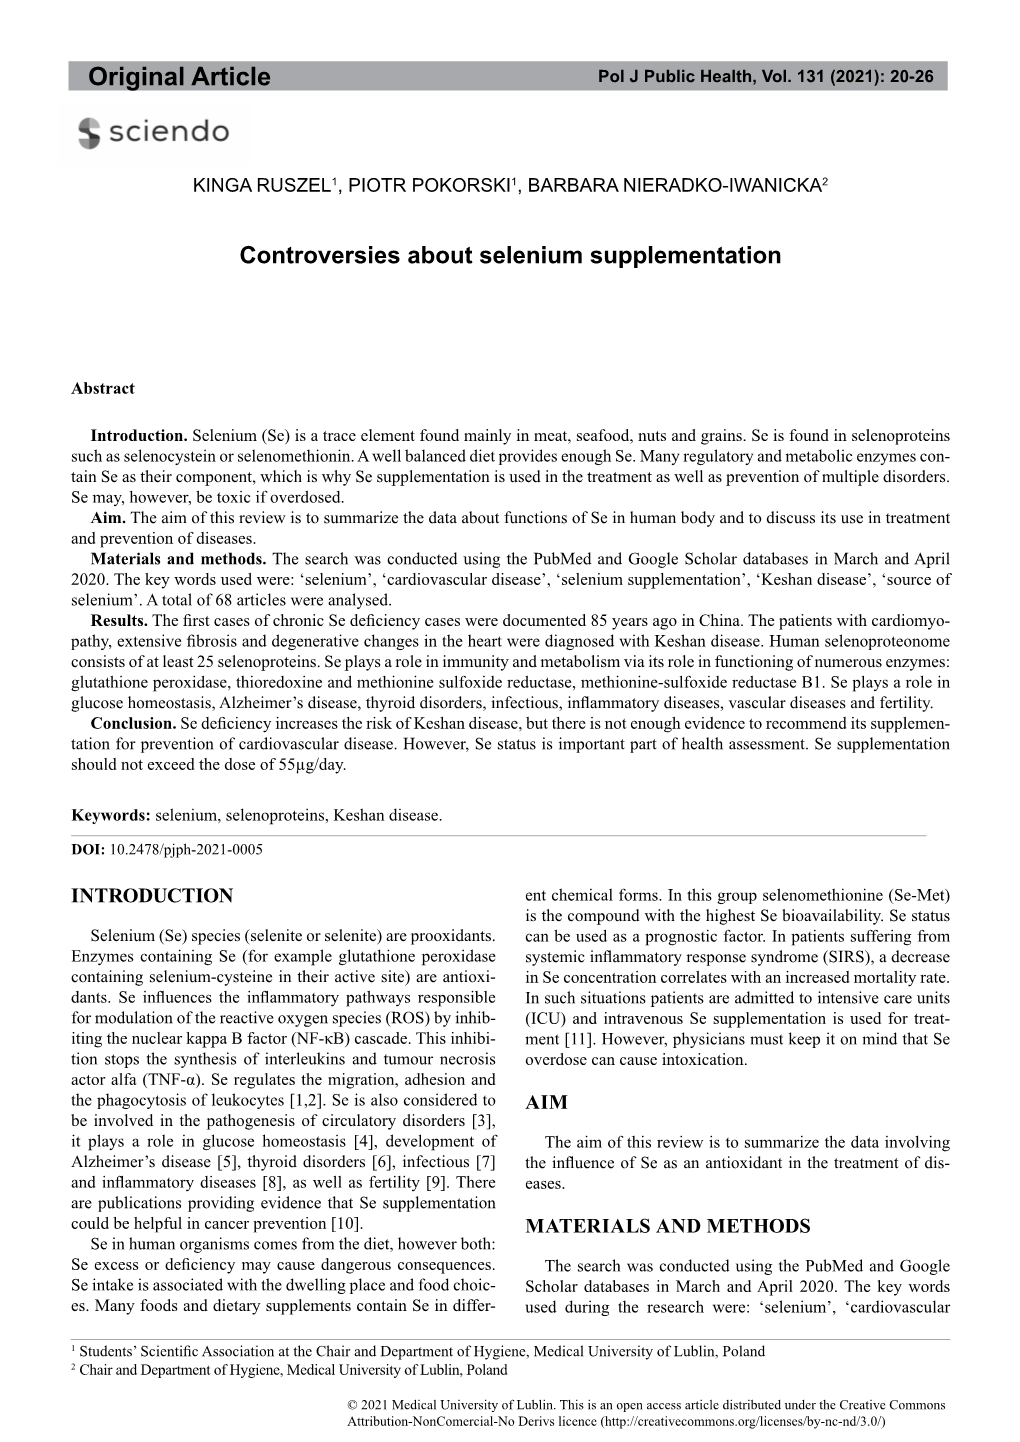 Controversies About Selenium Supplementation